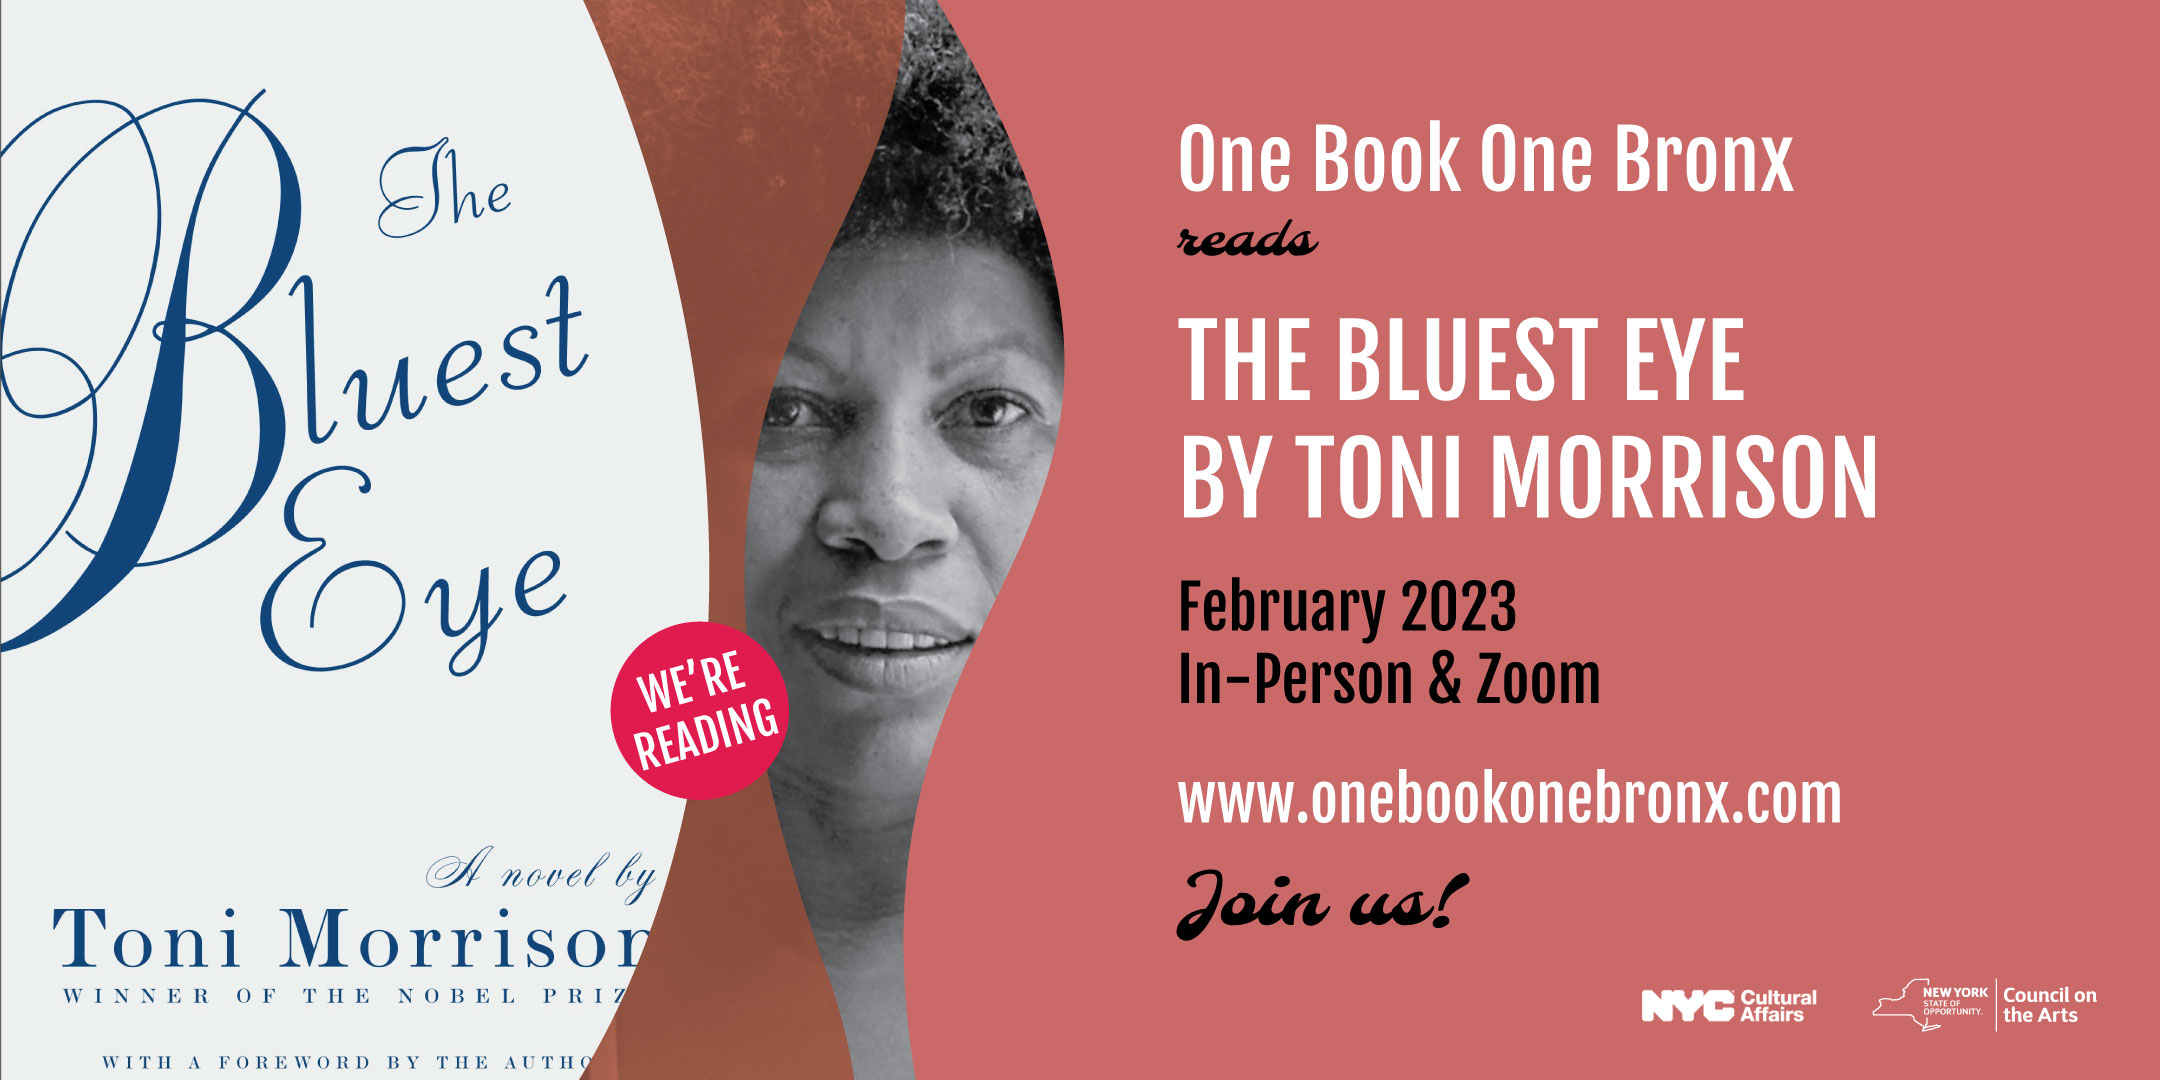 One Book One Bronx: The Bluest Eye by Toni Morrison